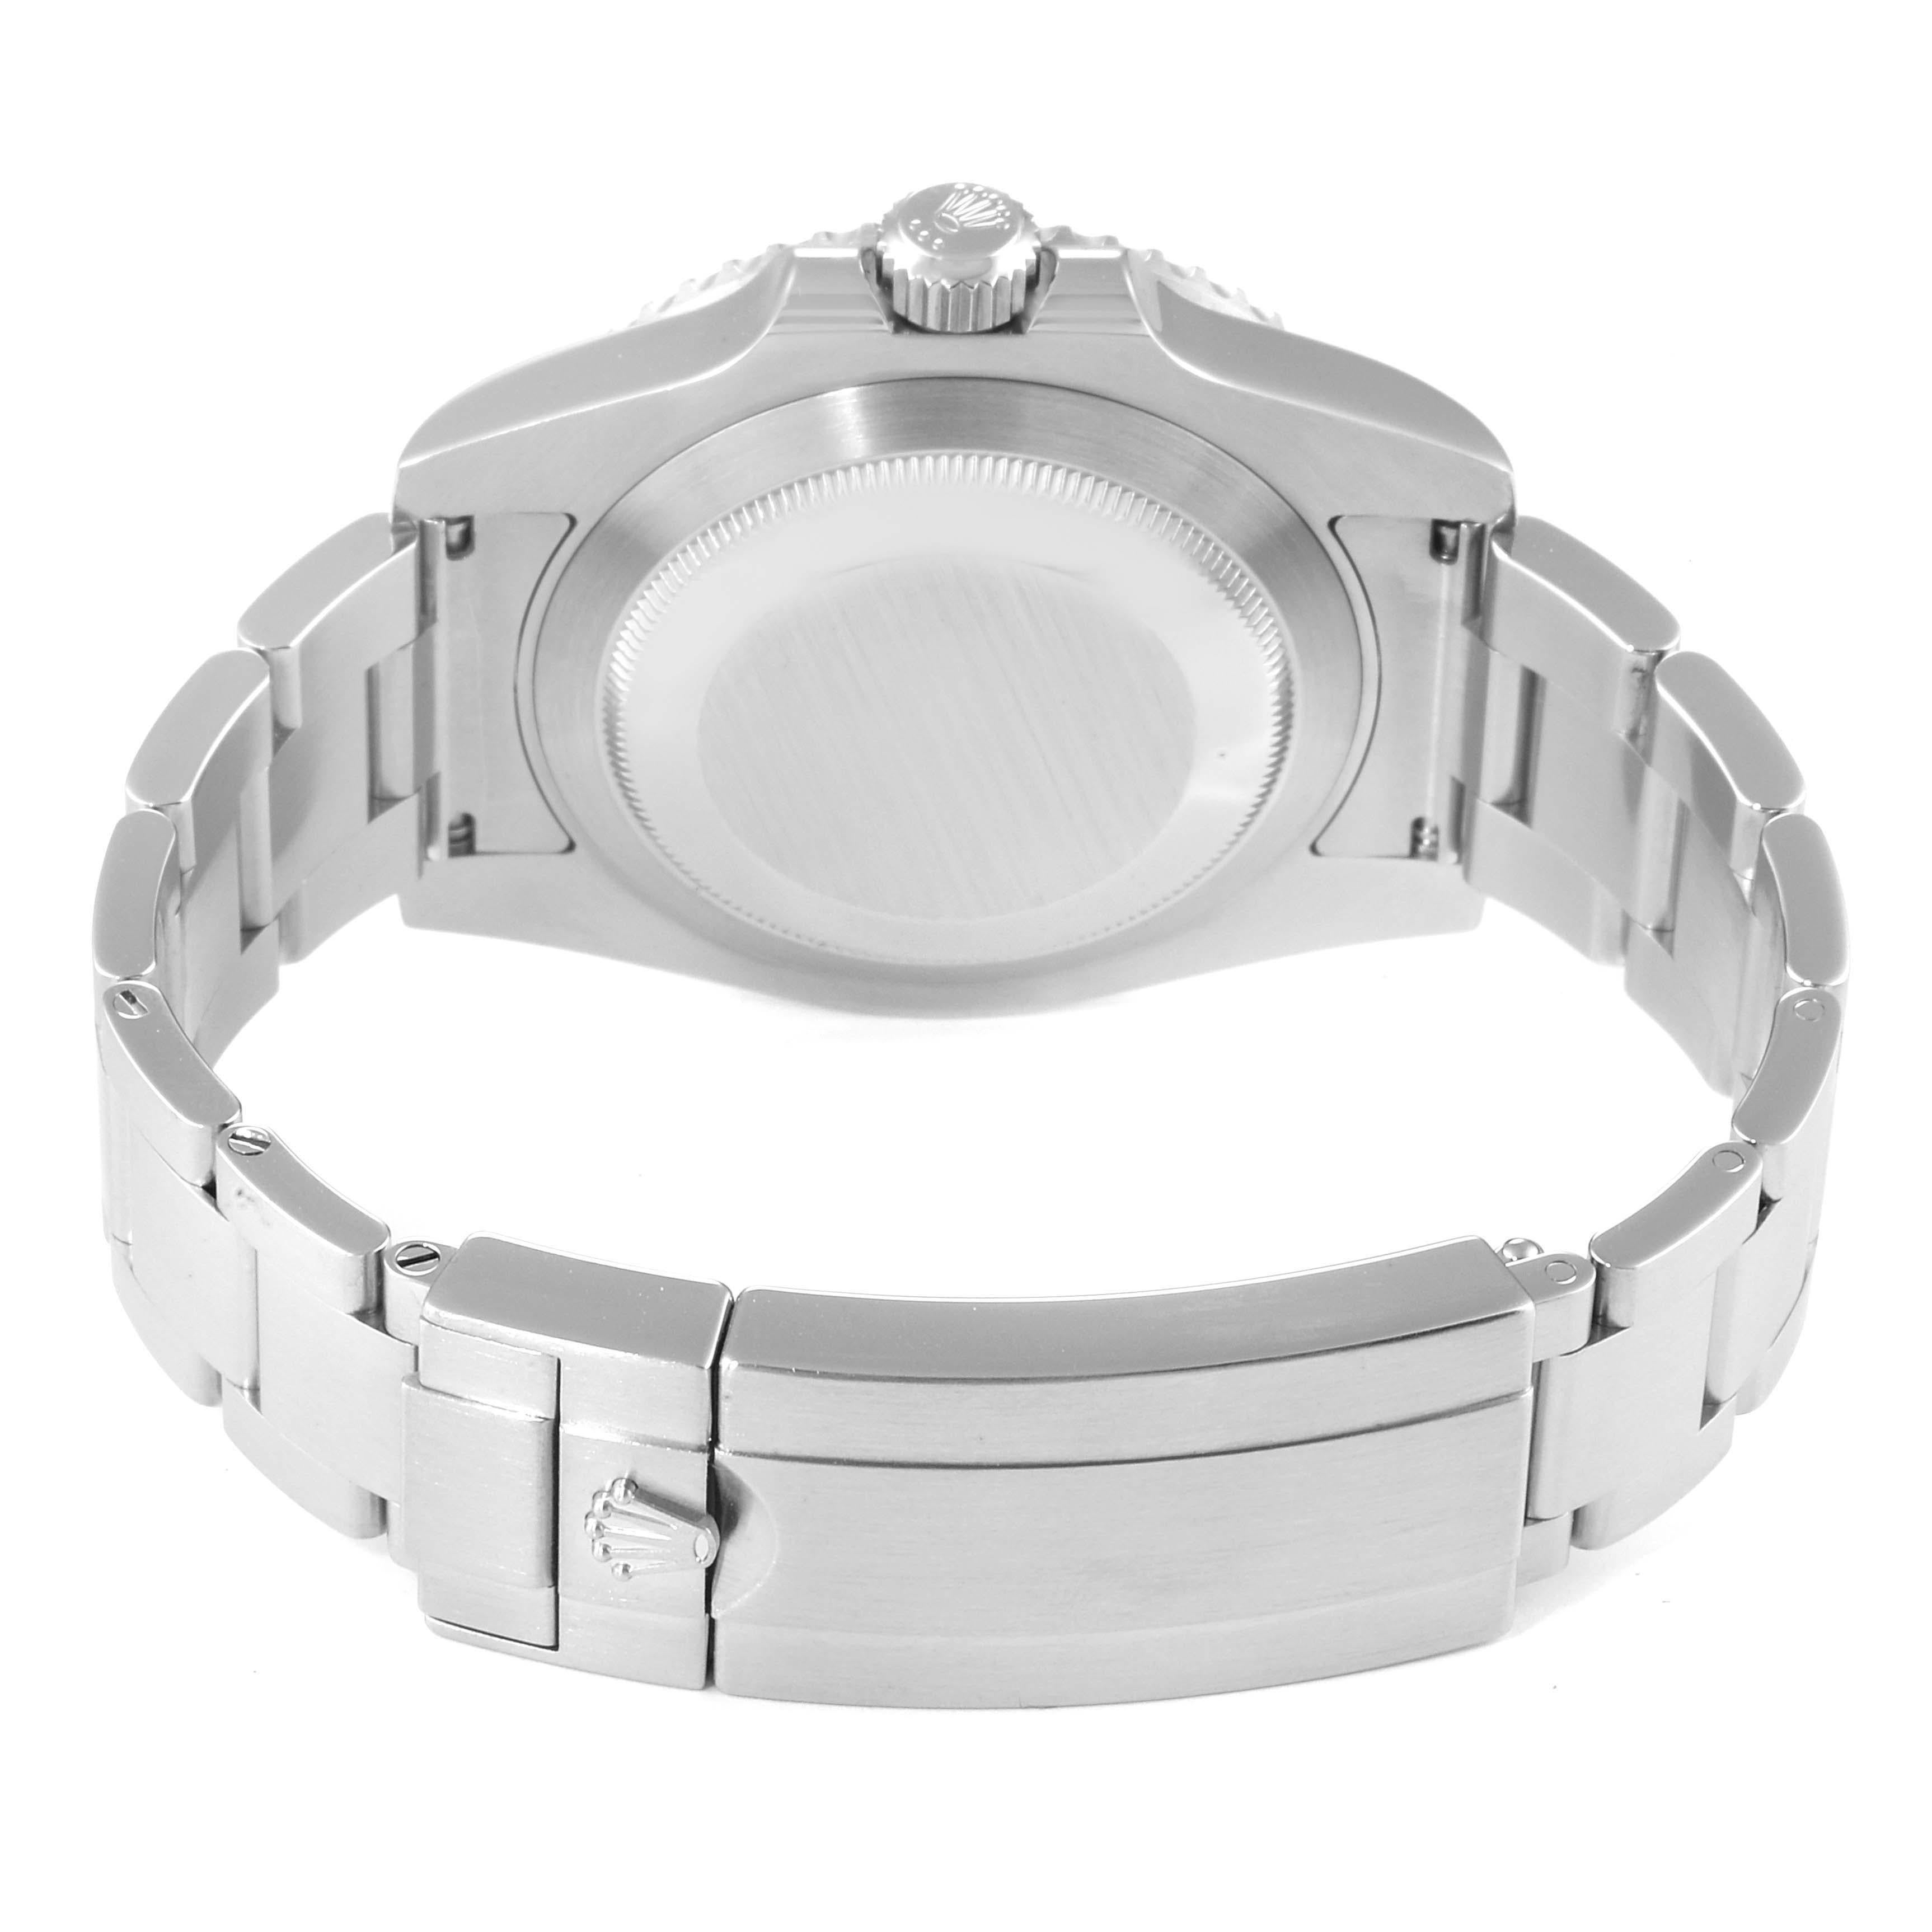 Rolex Submariner Ceramic Bezel Black Dial Steel Men's Watch 116610 6